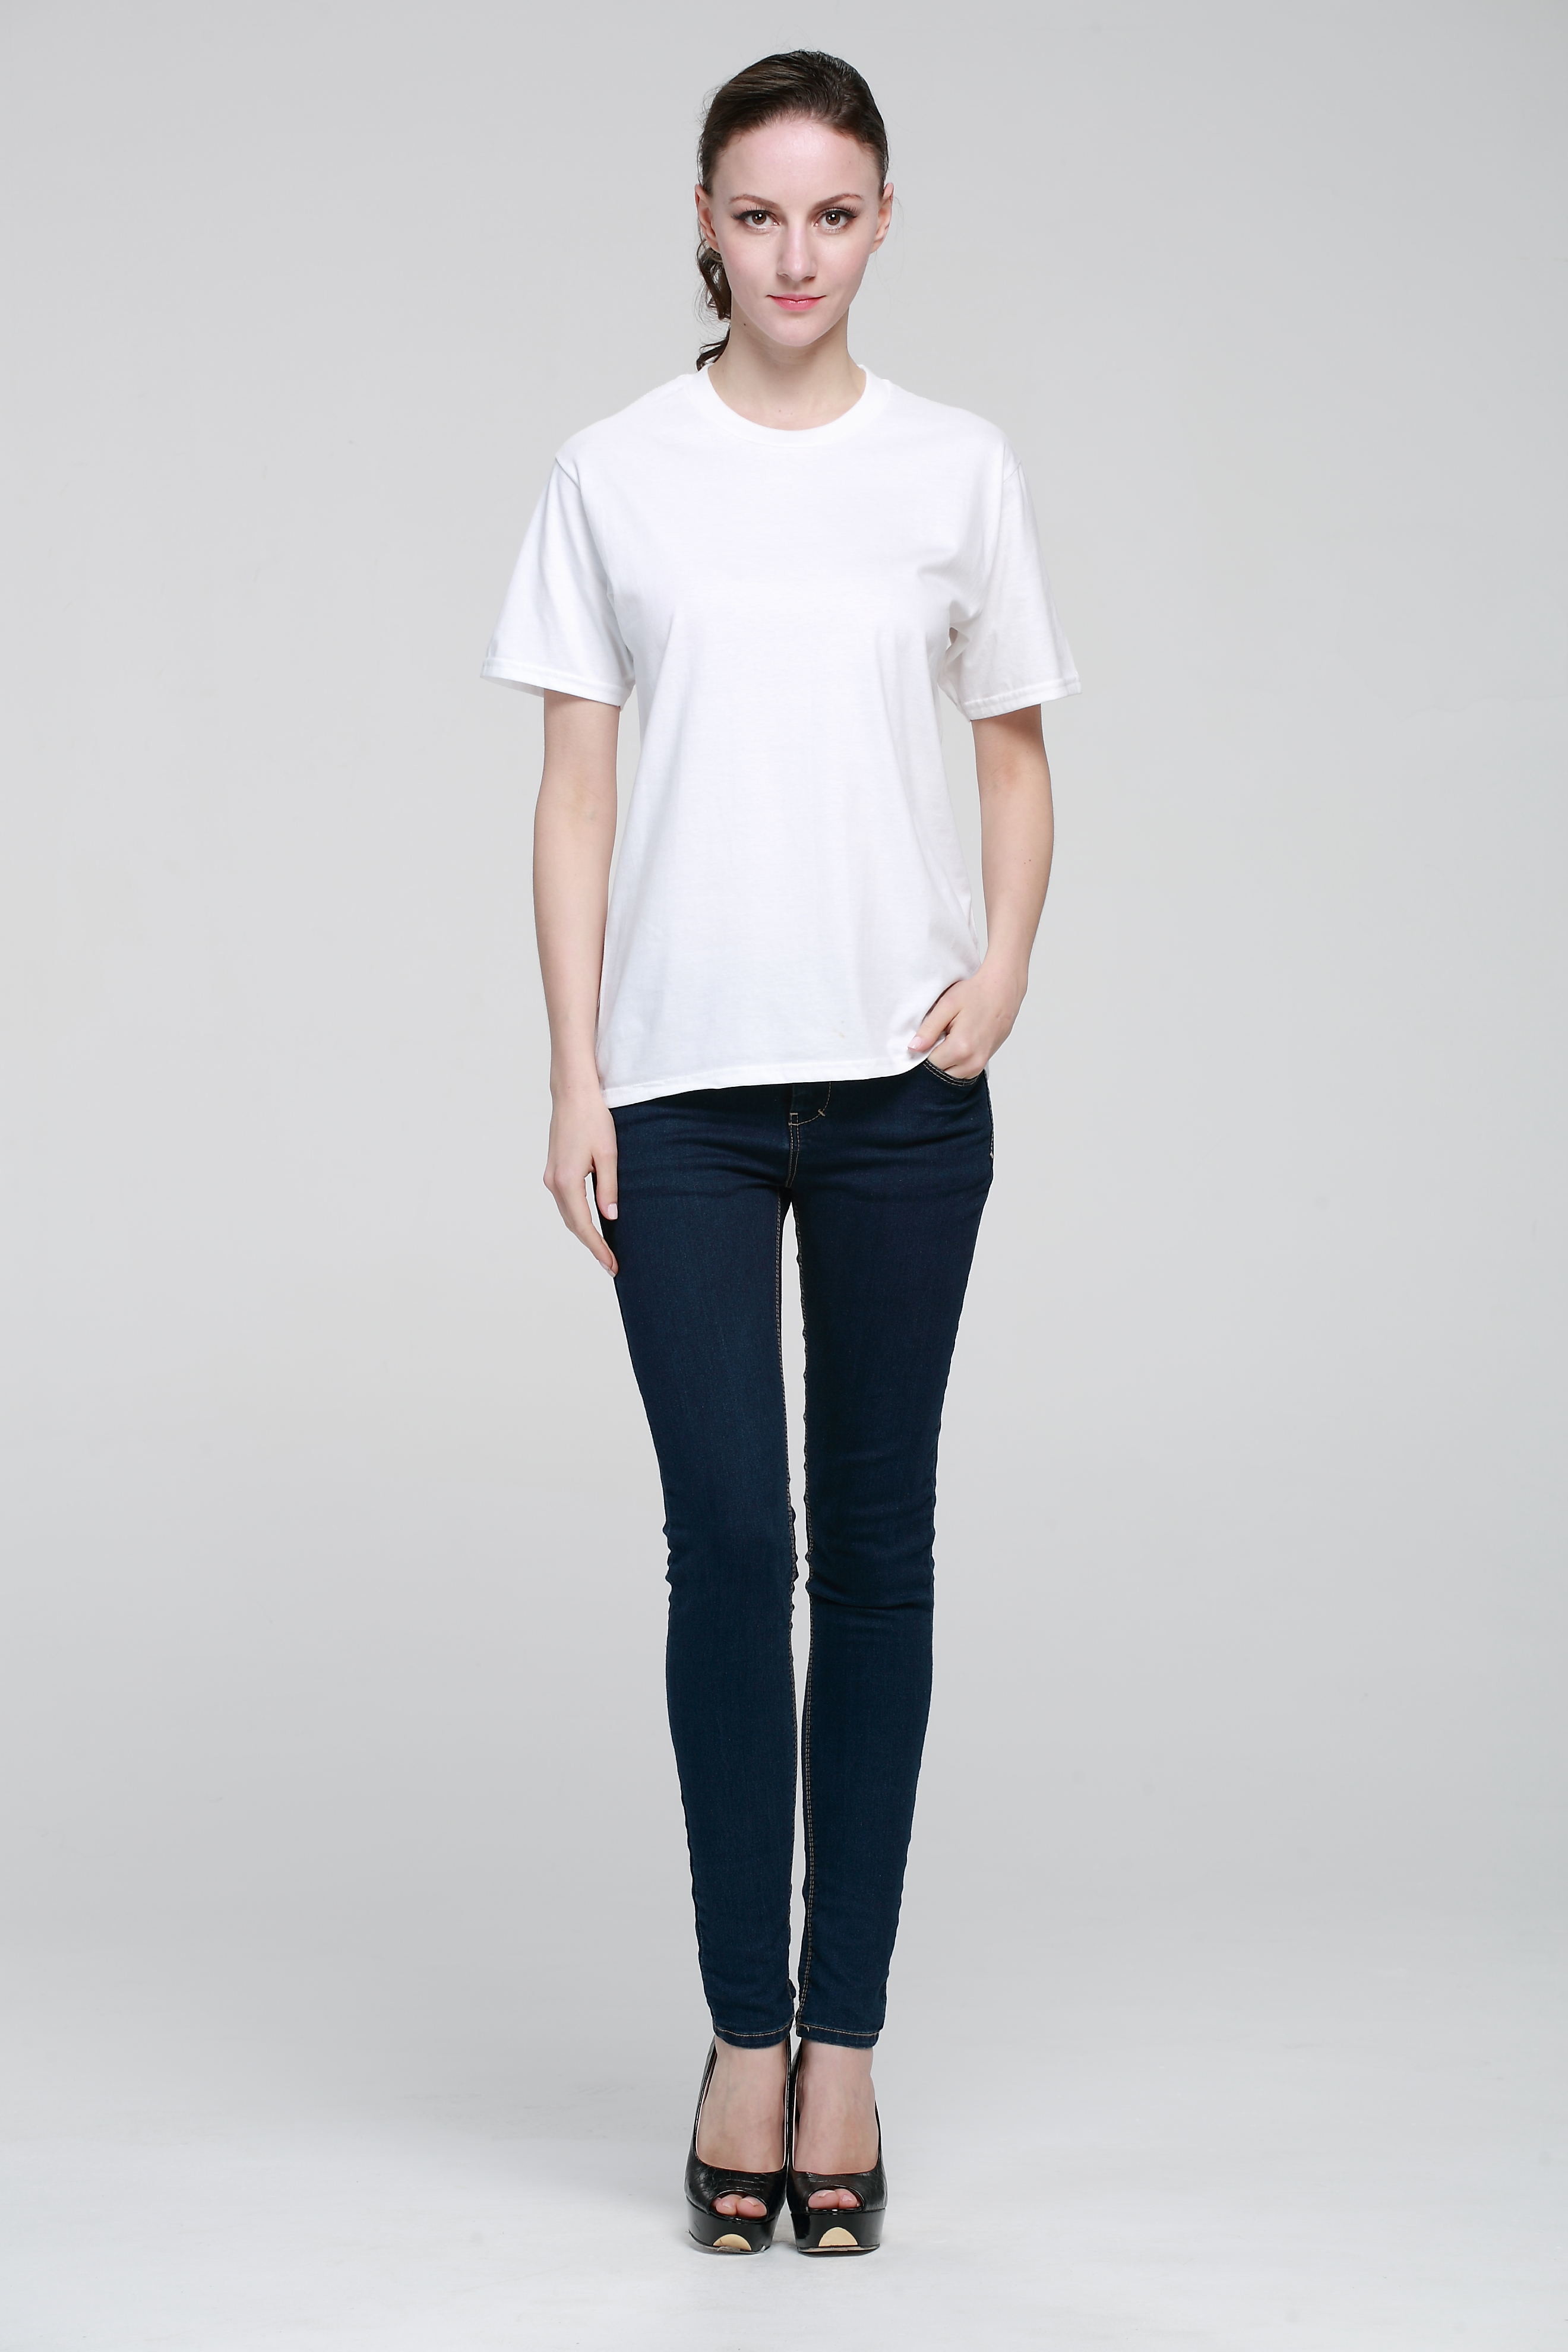 Ladies cotton T-Shirt,women t-shirt,Custom Logo Design Screen Printing Embroidery Fashionable Blank Women Ladies Female